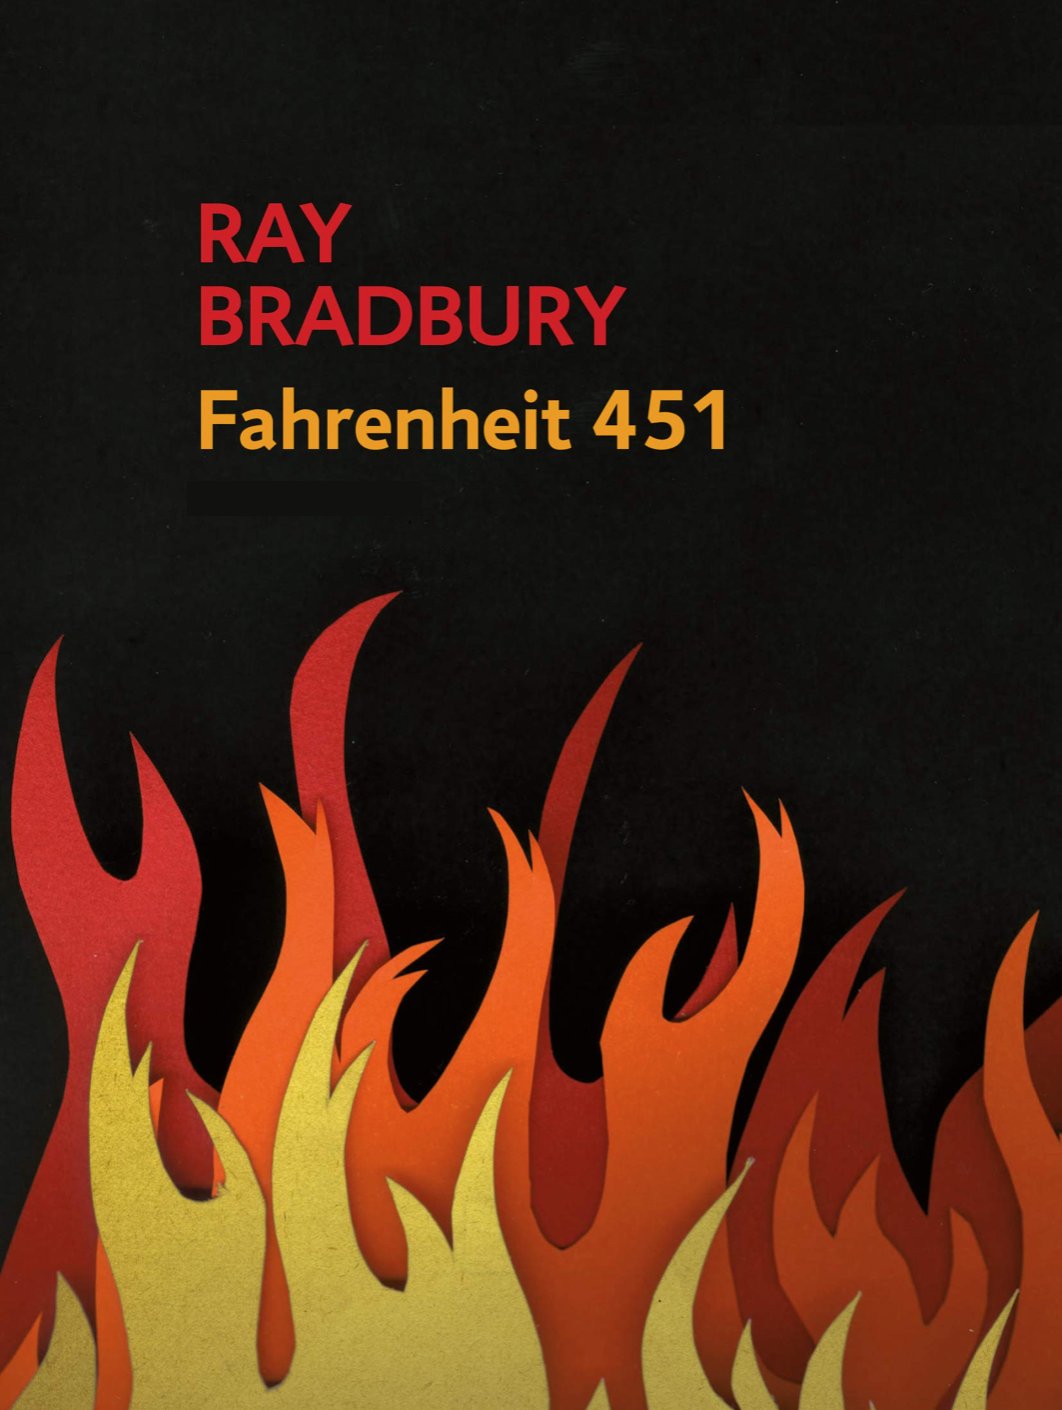 451 по фаренгейту fb2. Ray Bradbury "Fahrenheit 451". 451 Degrees Fahrenheit ray Bradbury.